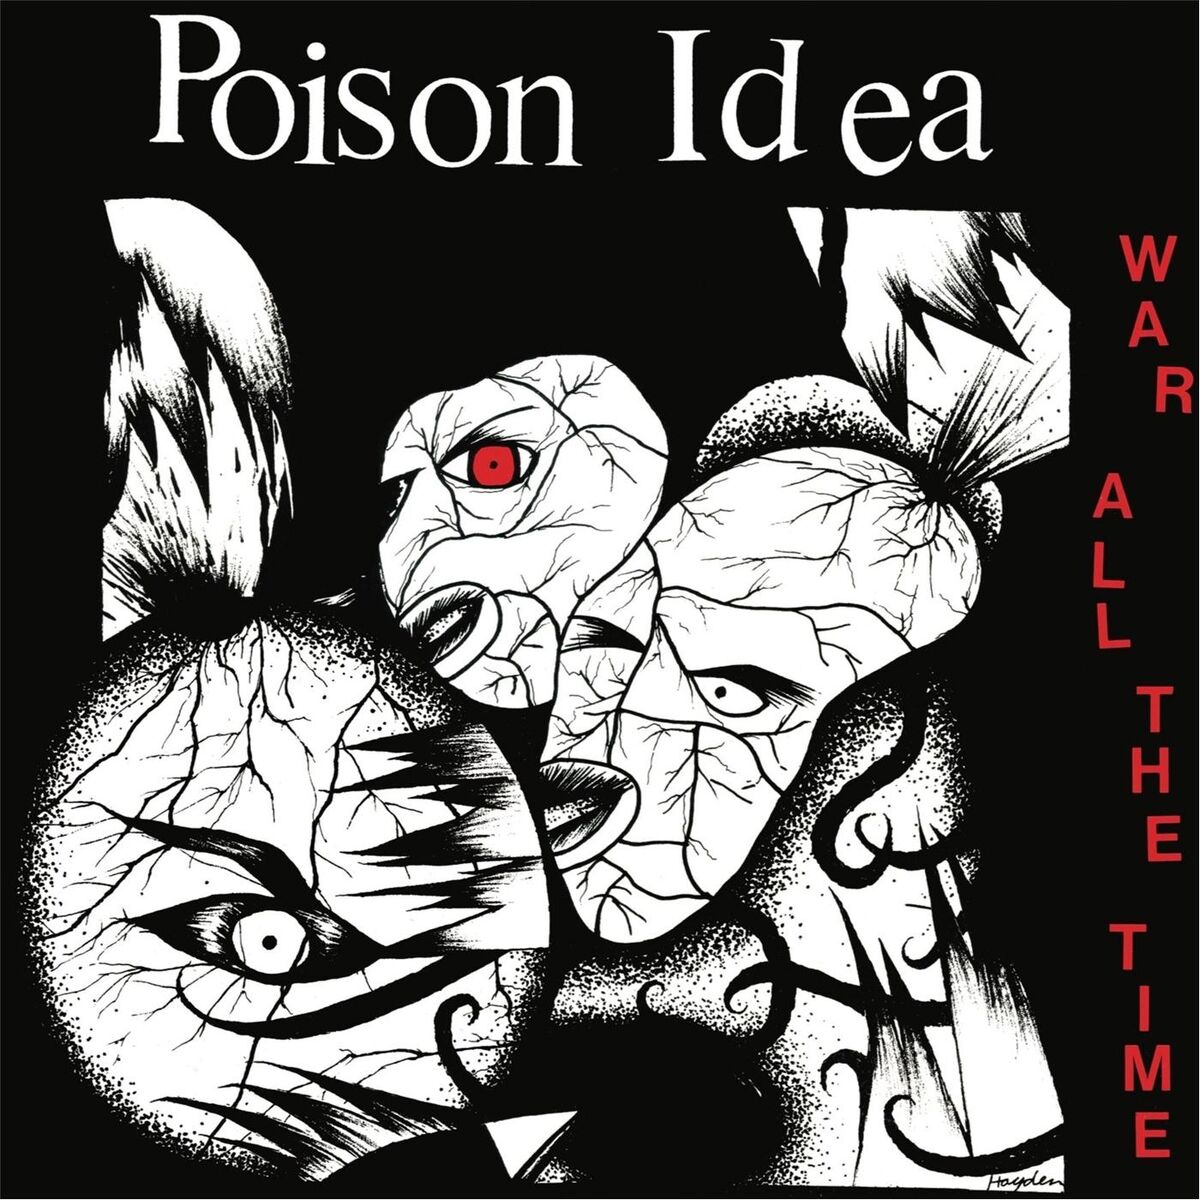 Poison Idea: albums, songs, playlists | Listen on Deezer